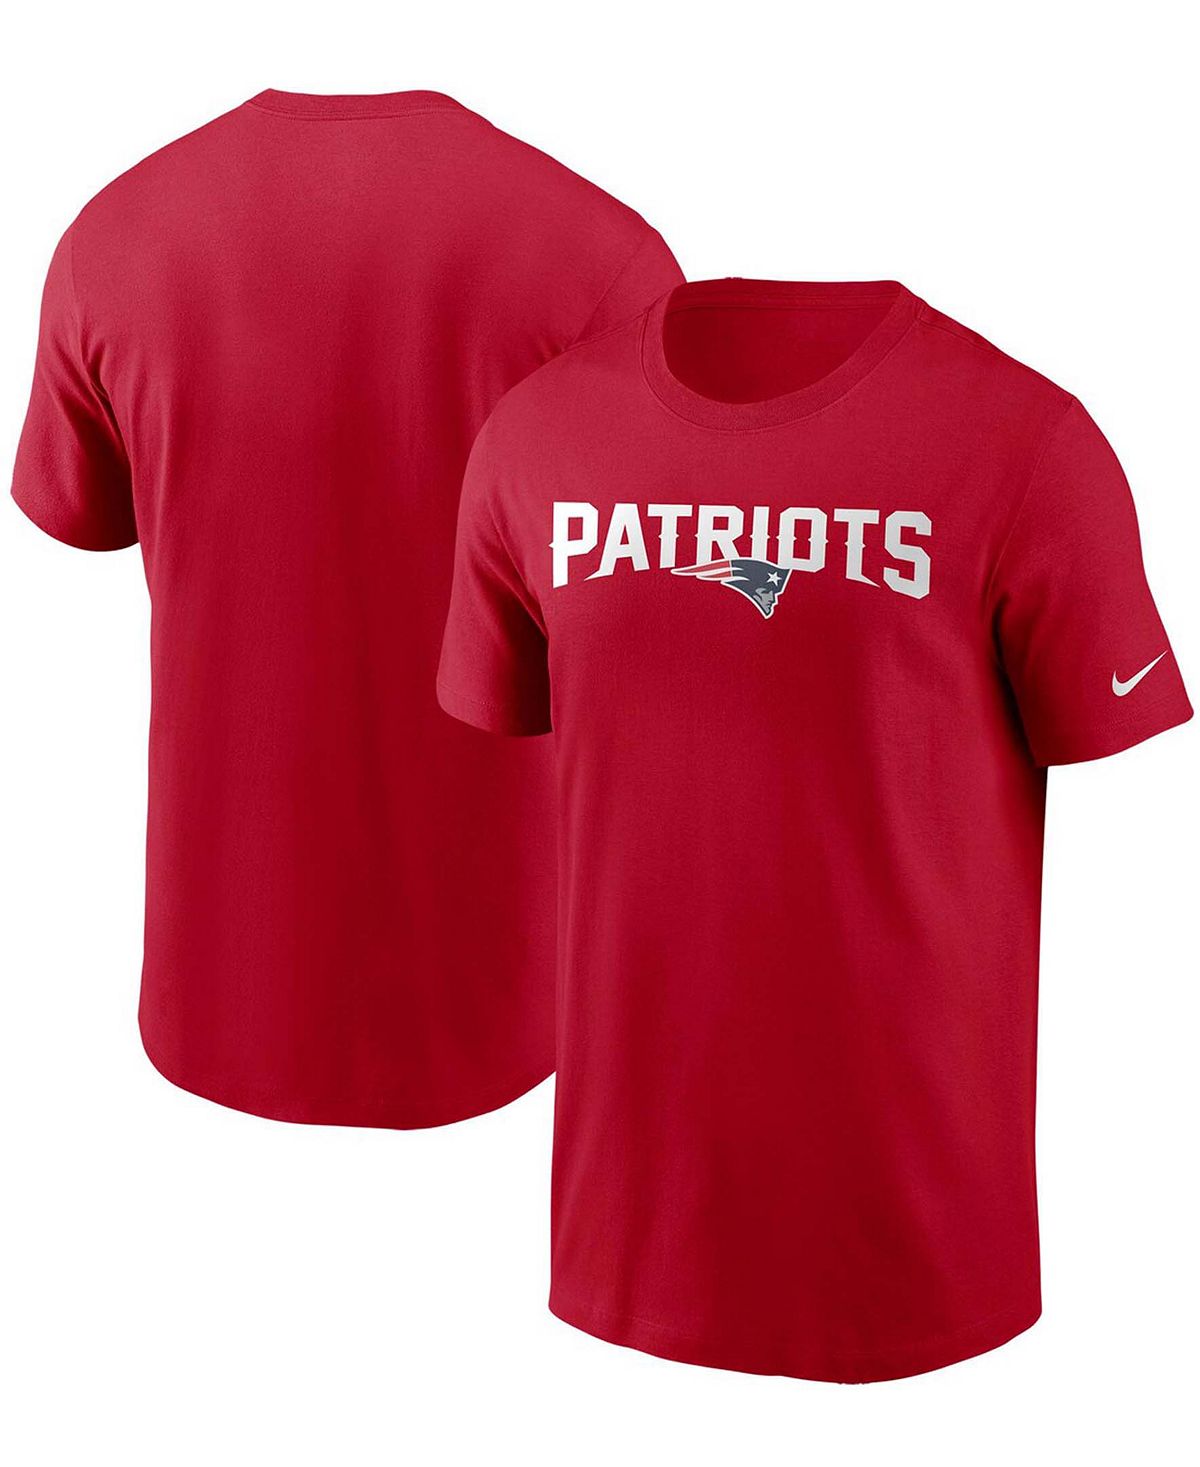 Мужская красная футболка с надписью New England Patriots Team Nike